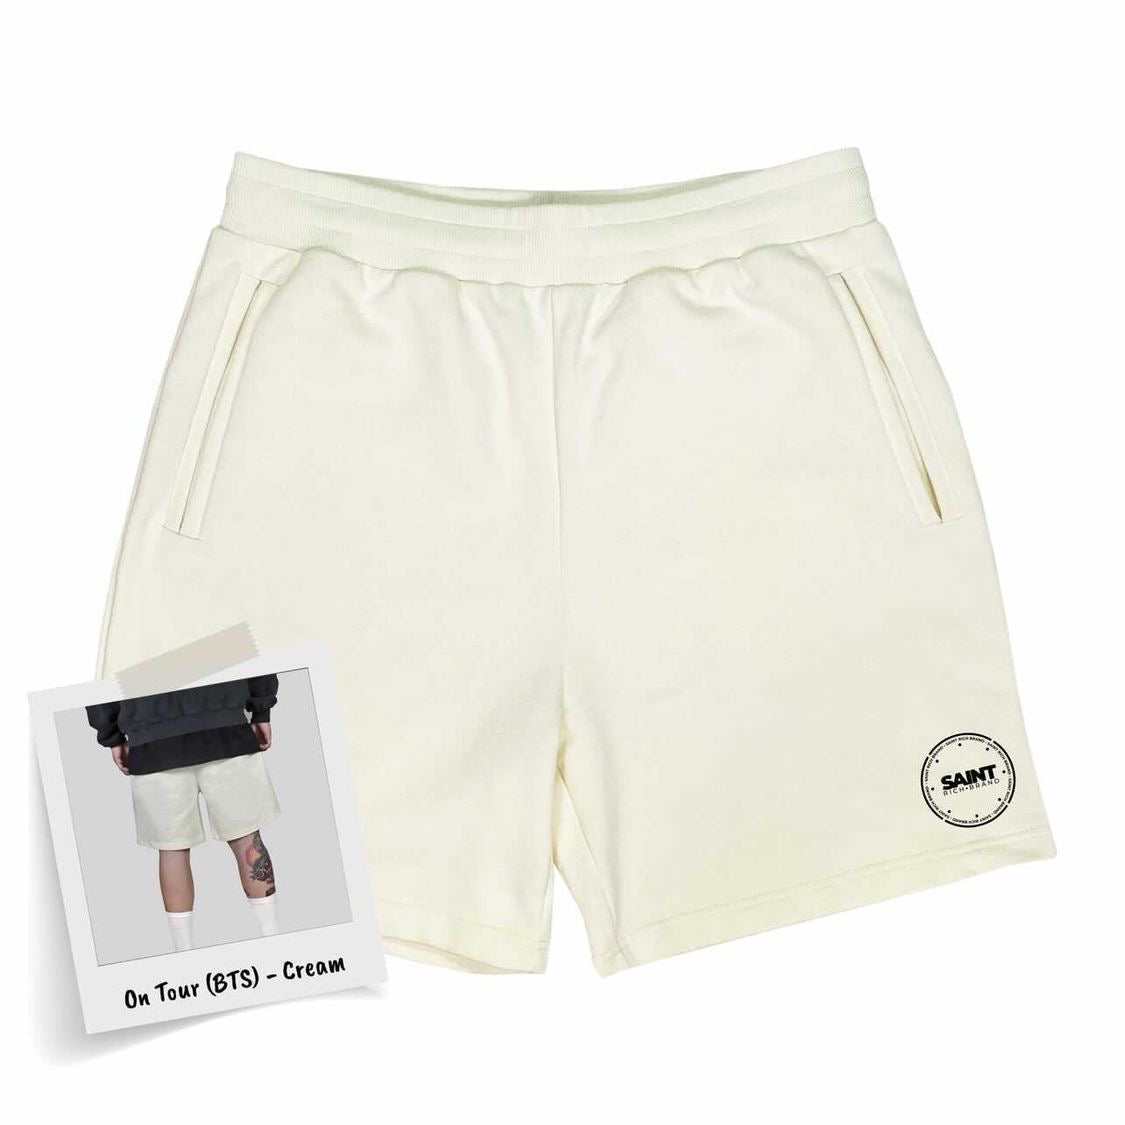 S1:E1 Lux Street Wear: On Tour Shorts